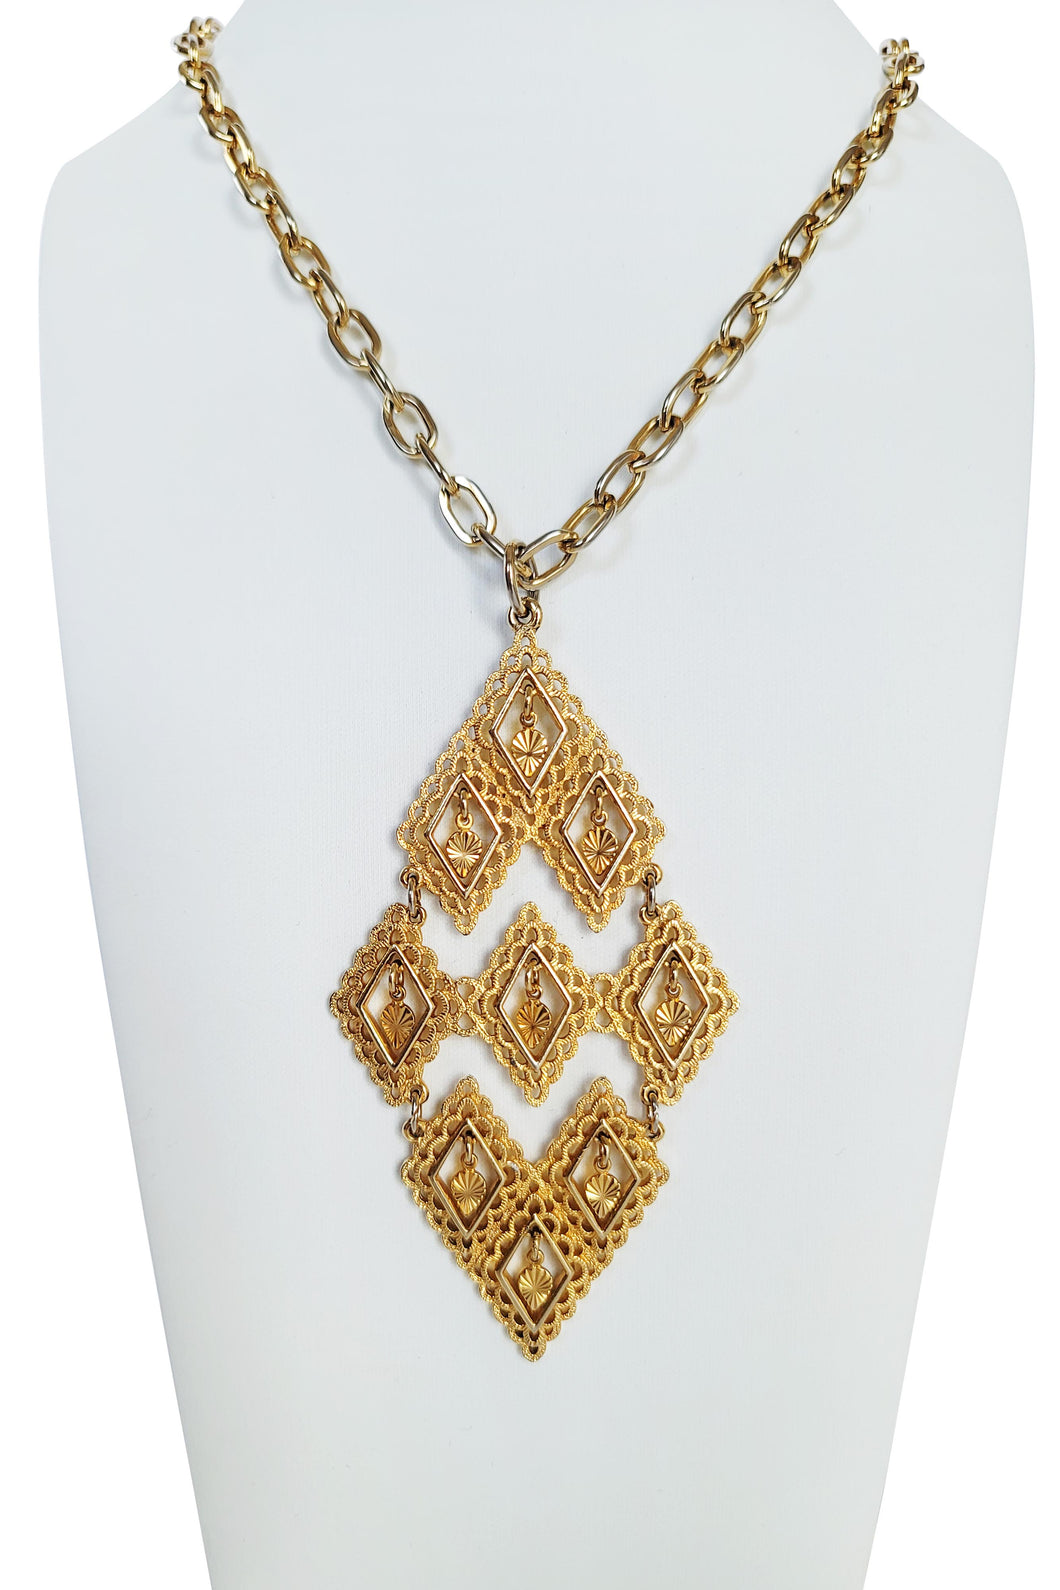 Vintage Goldtone Diamond Filagree Pendant Necklace